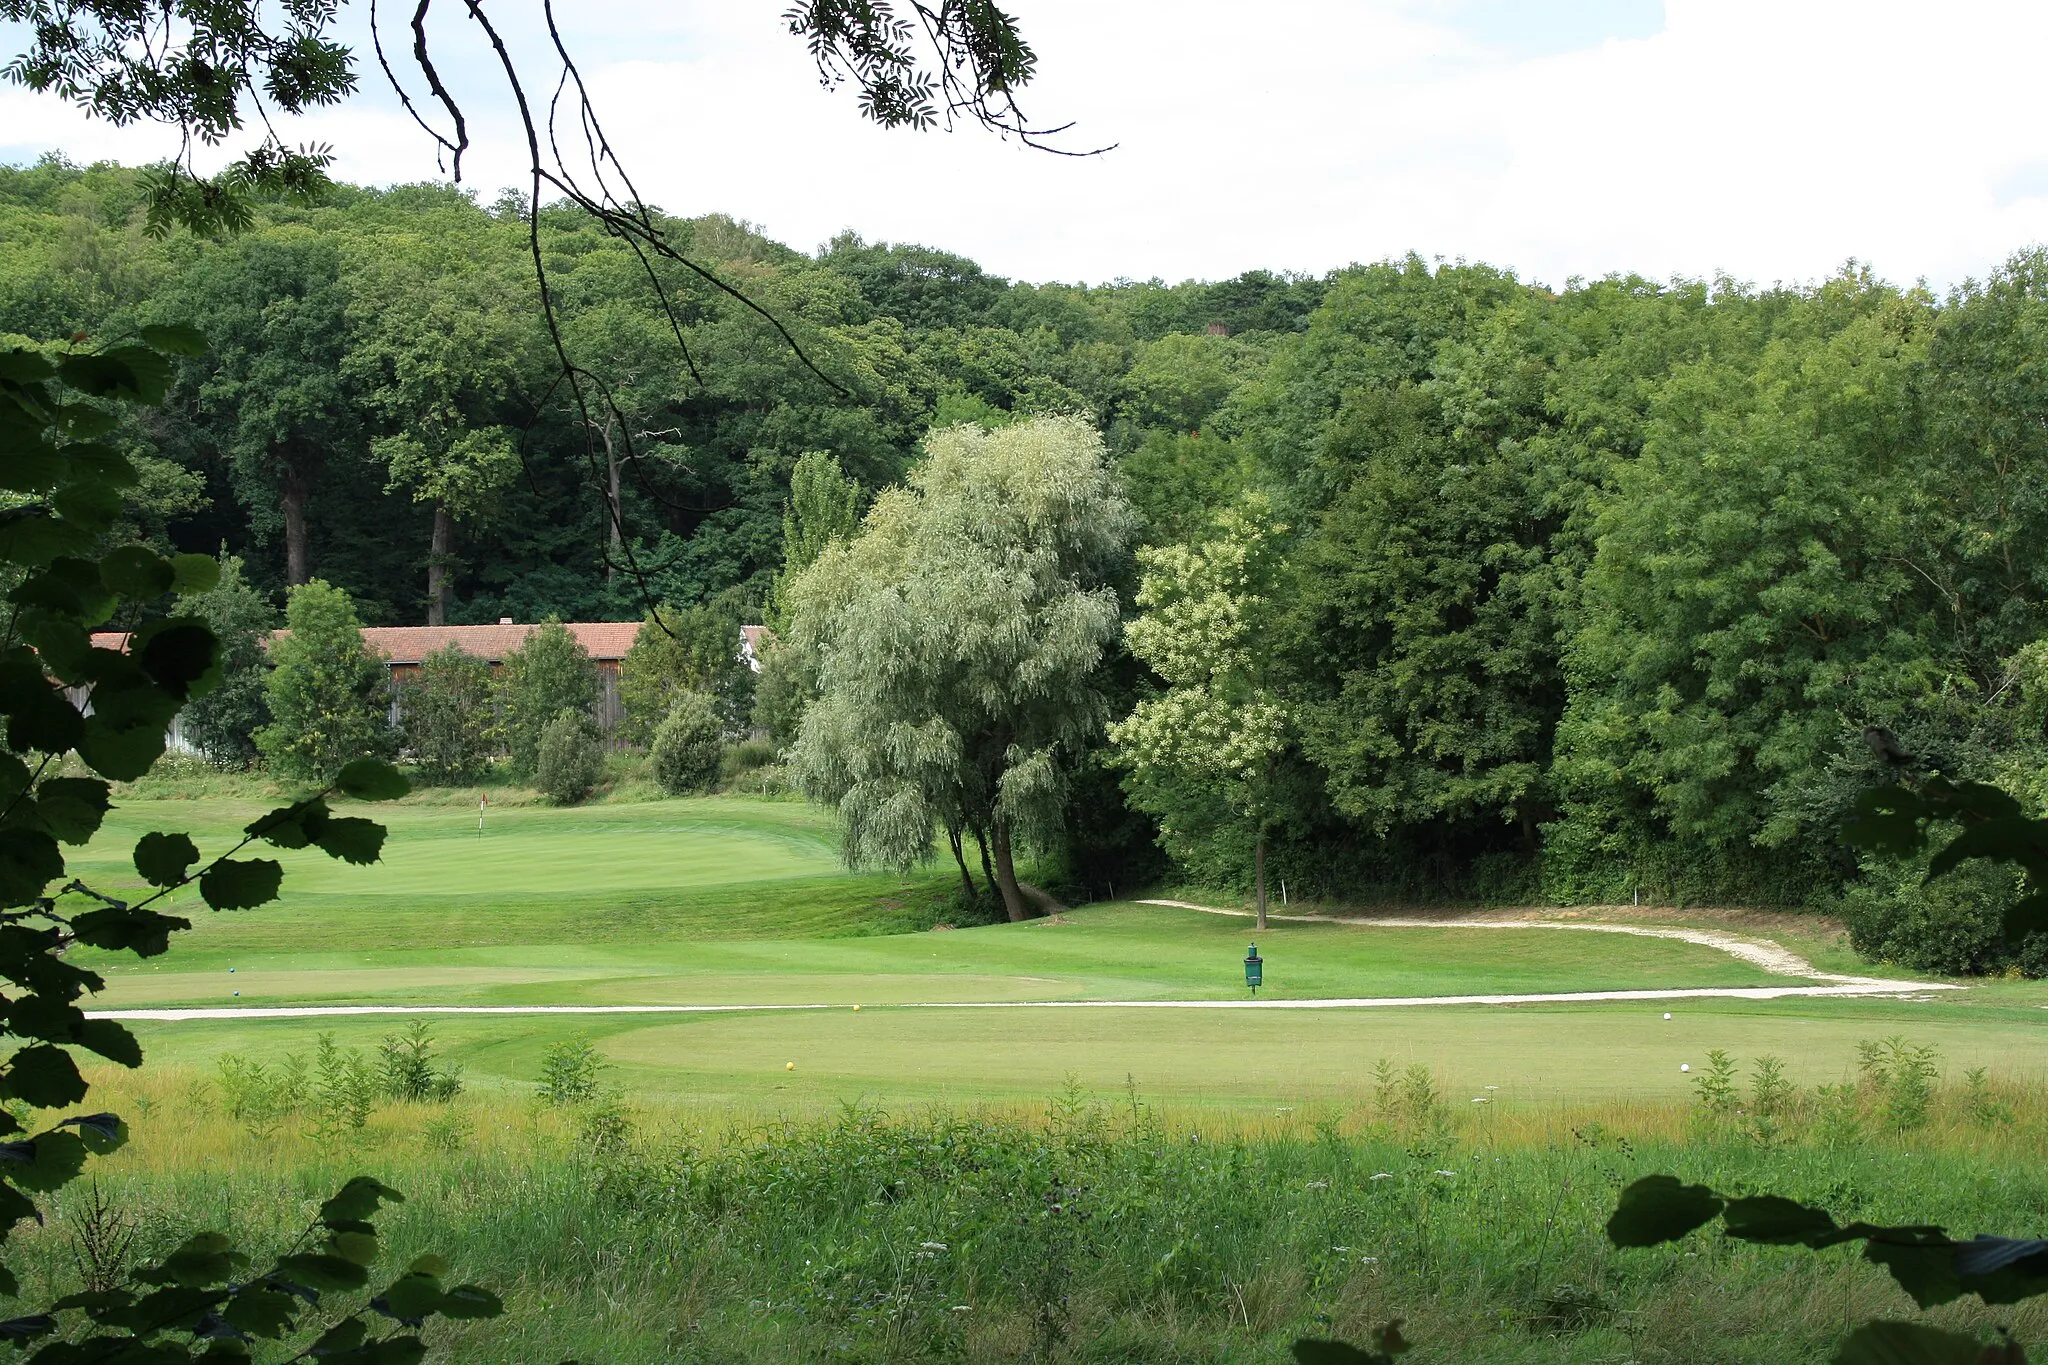 Photo showing: Golf near the Désert de Retz park in Chambourcy, France